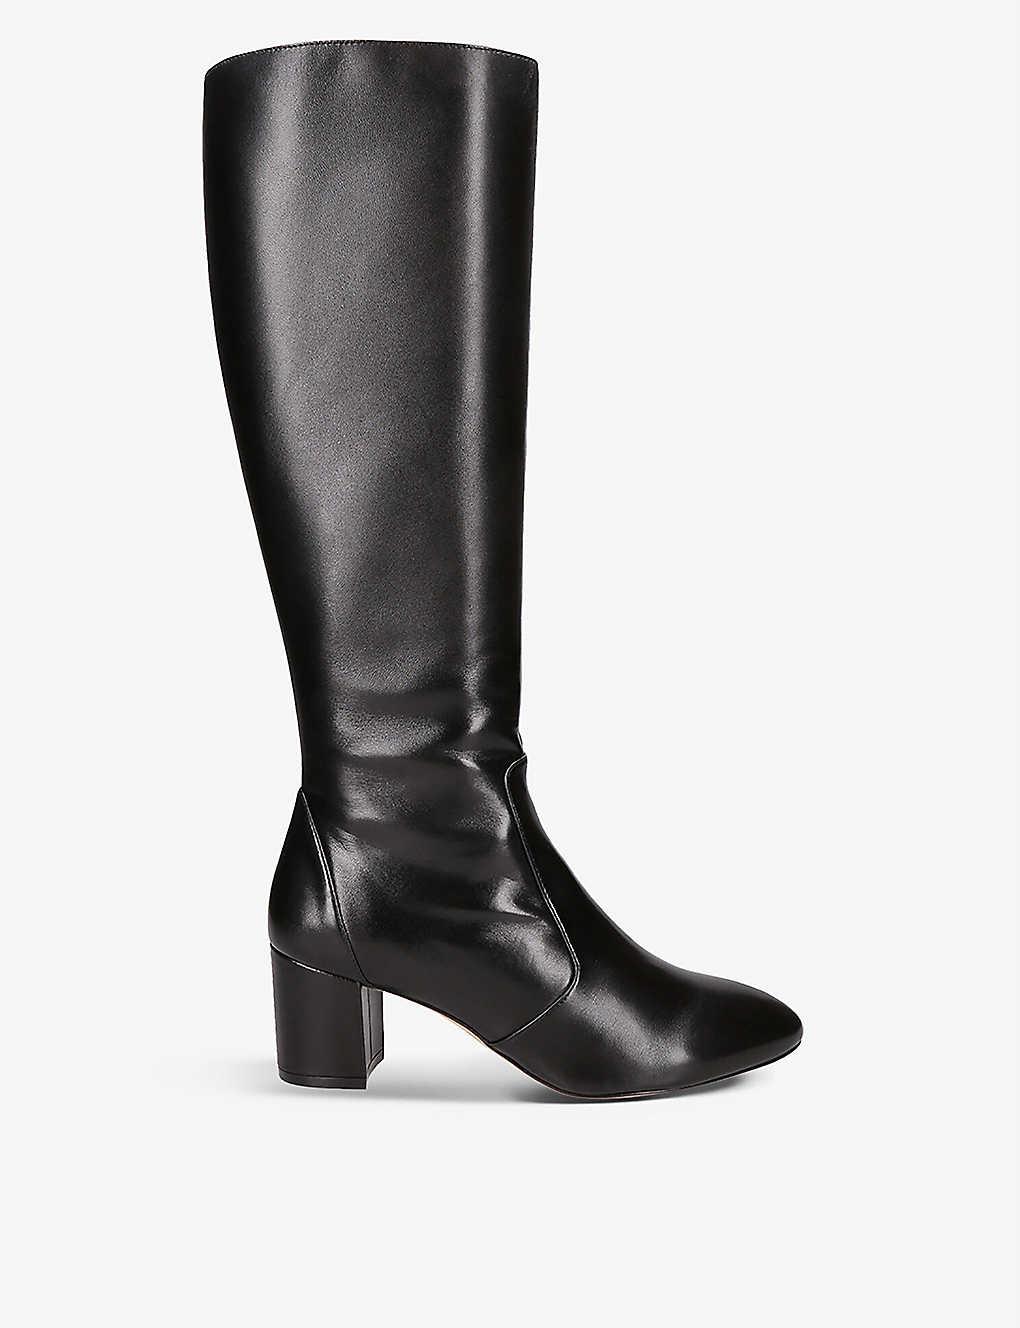 Stuart Weitzman Yuliana 60 Knee-high Leather Boots in Black | Lyst